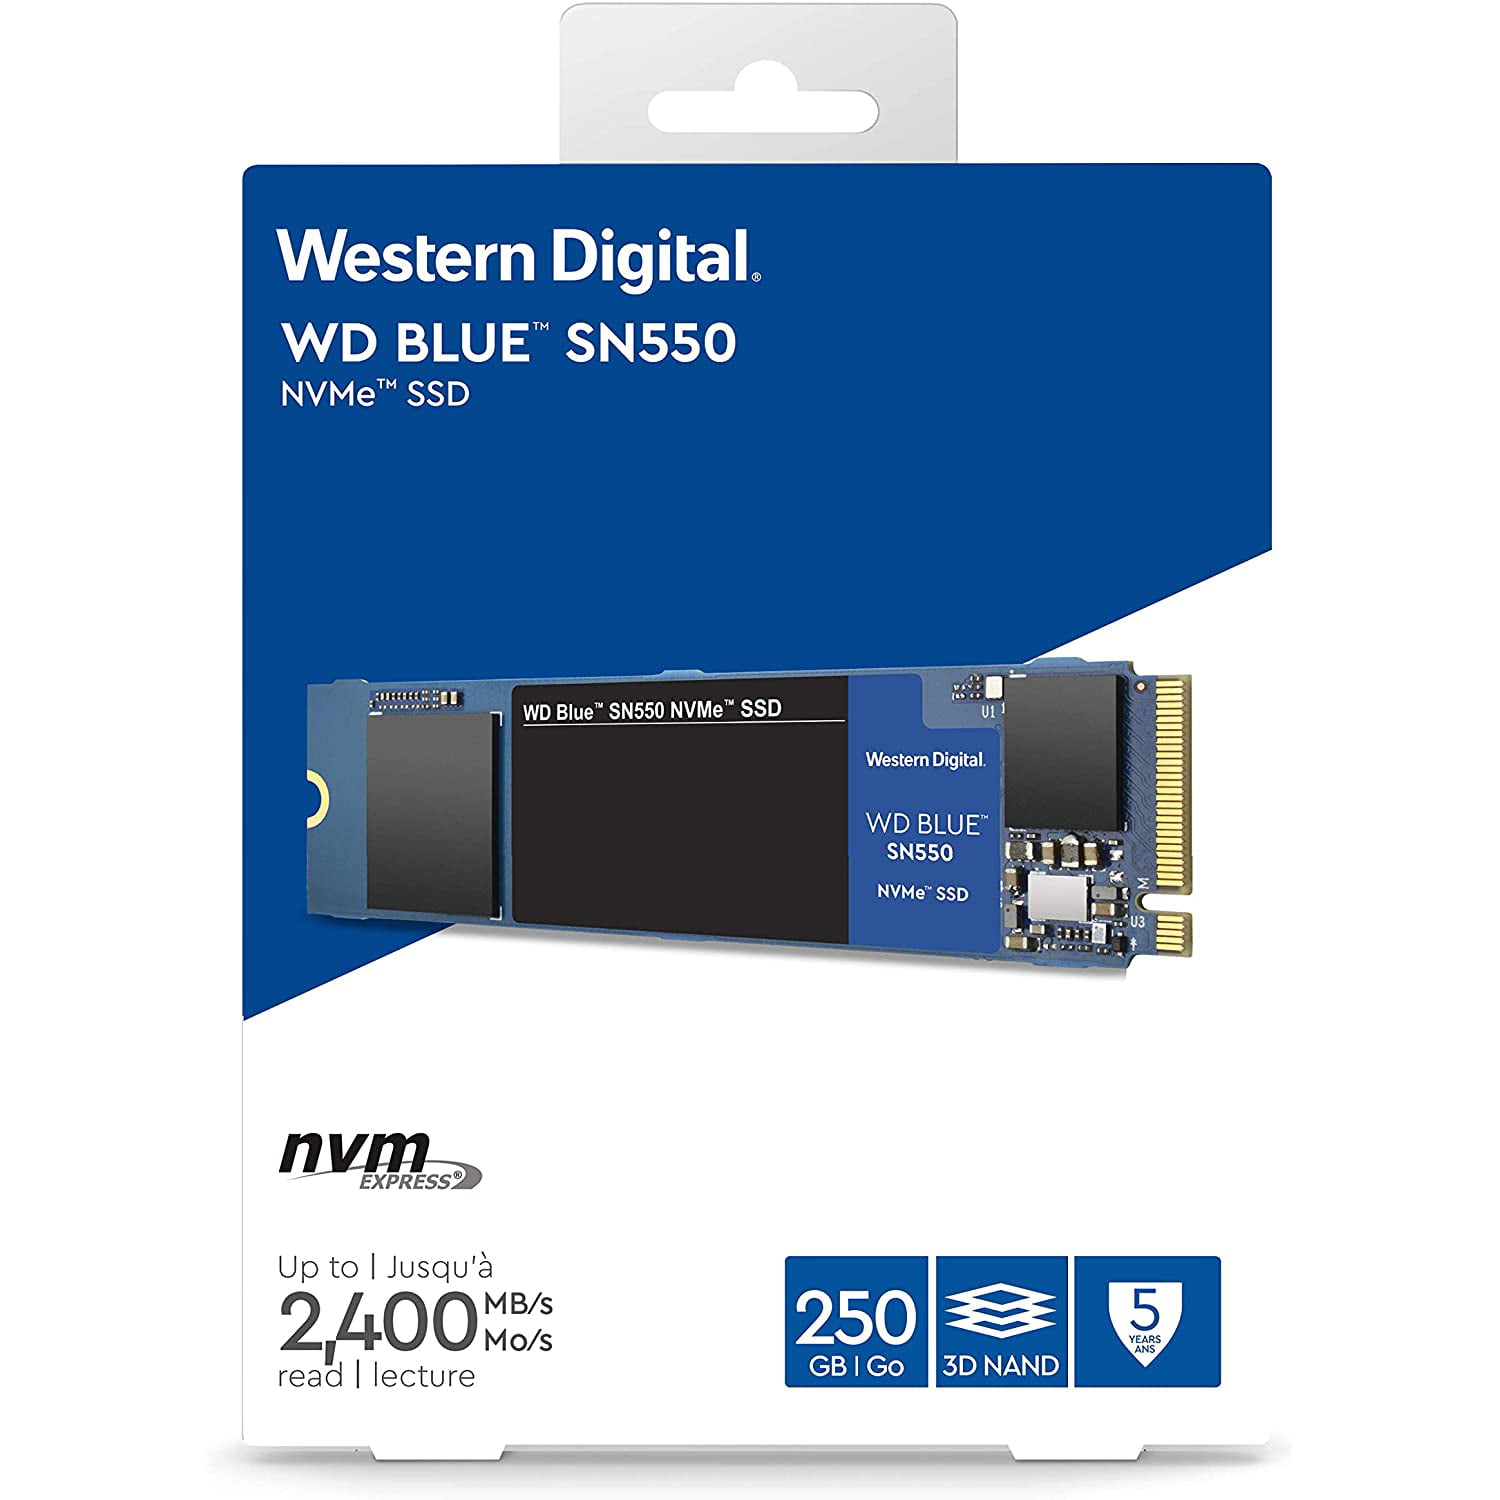 Perth halv otte Arrowhead Western Digital 250GB WD Blue SN550 NVMe Internal SSD - Gen3 x4 PCIe 8Gb/s,  M.2 2280, 3D NAND, Up to 2,400 MB/s - WDS250G2B0C - Walmart.com